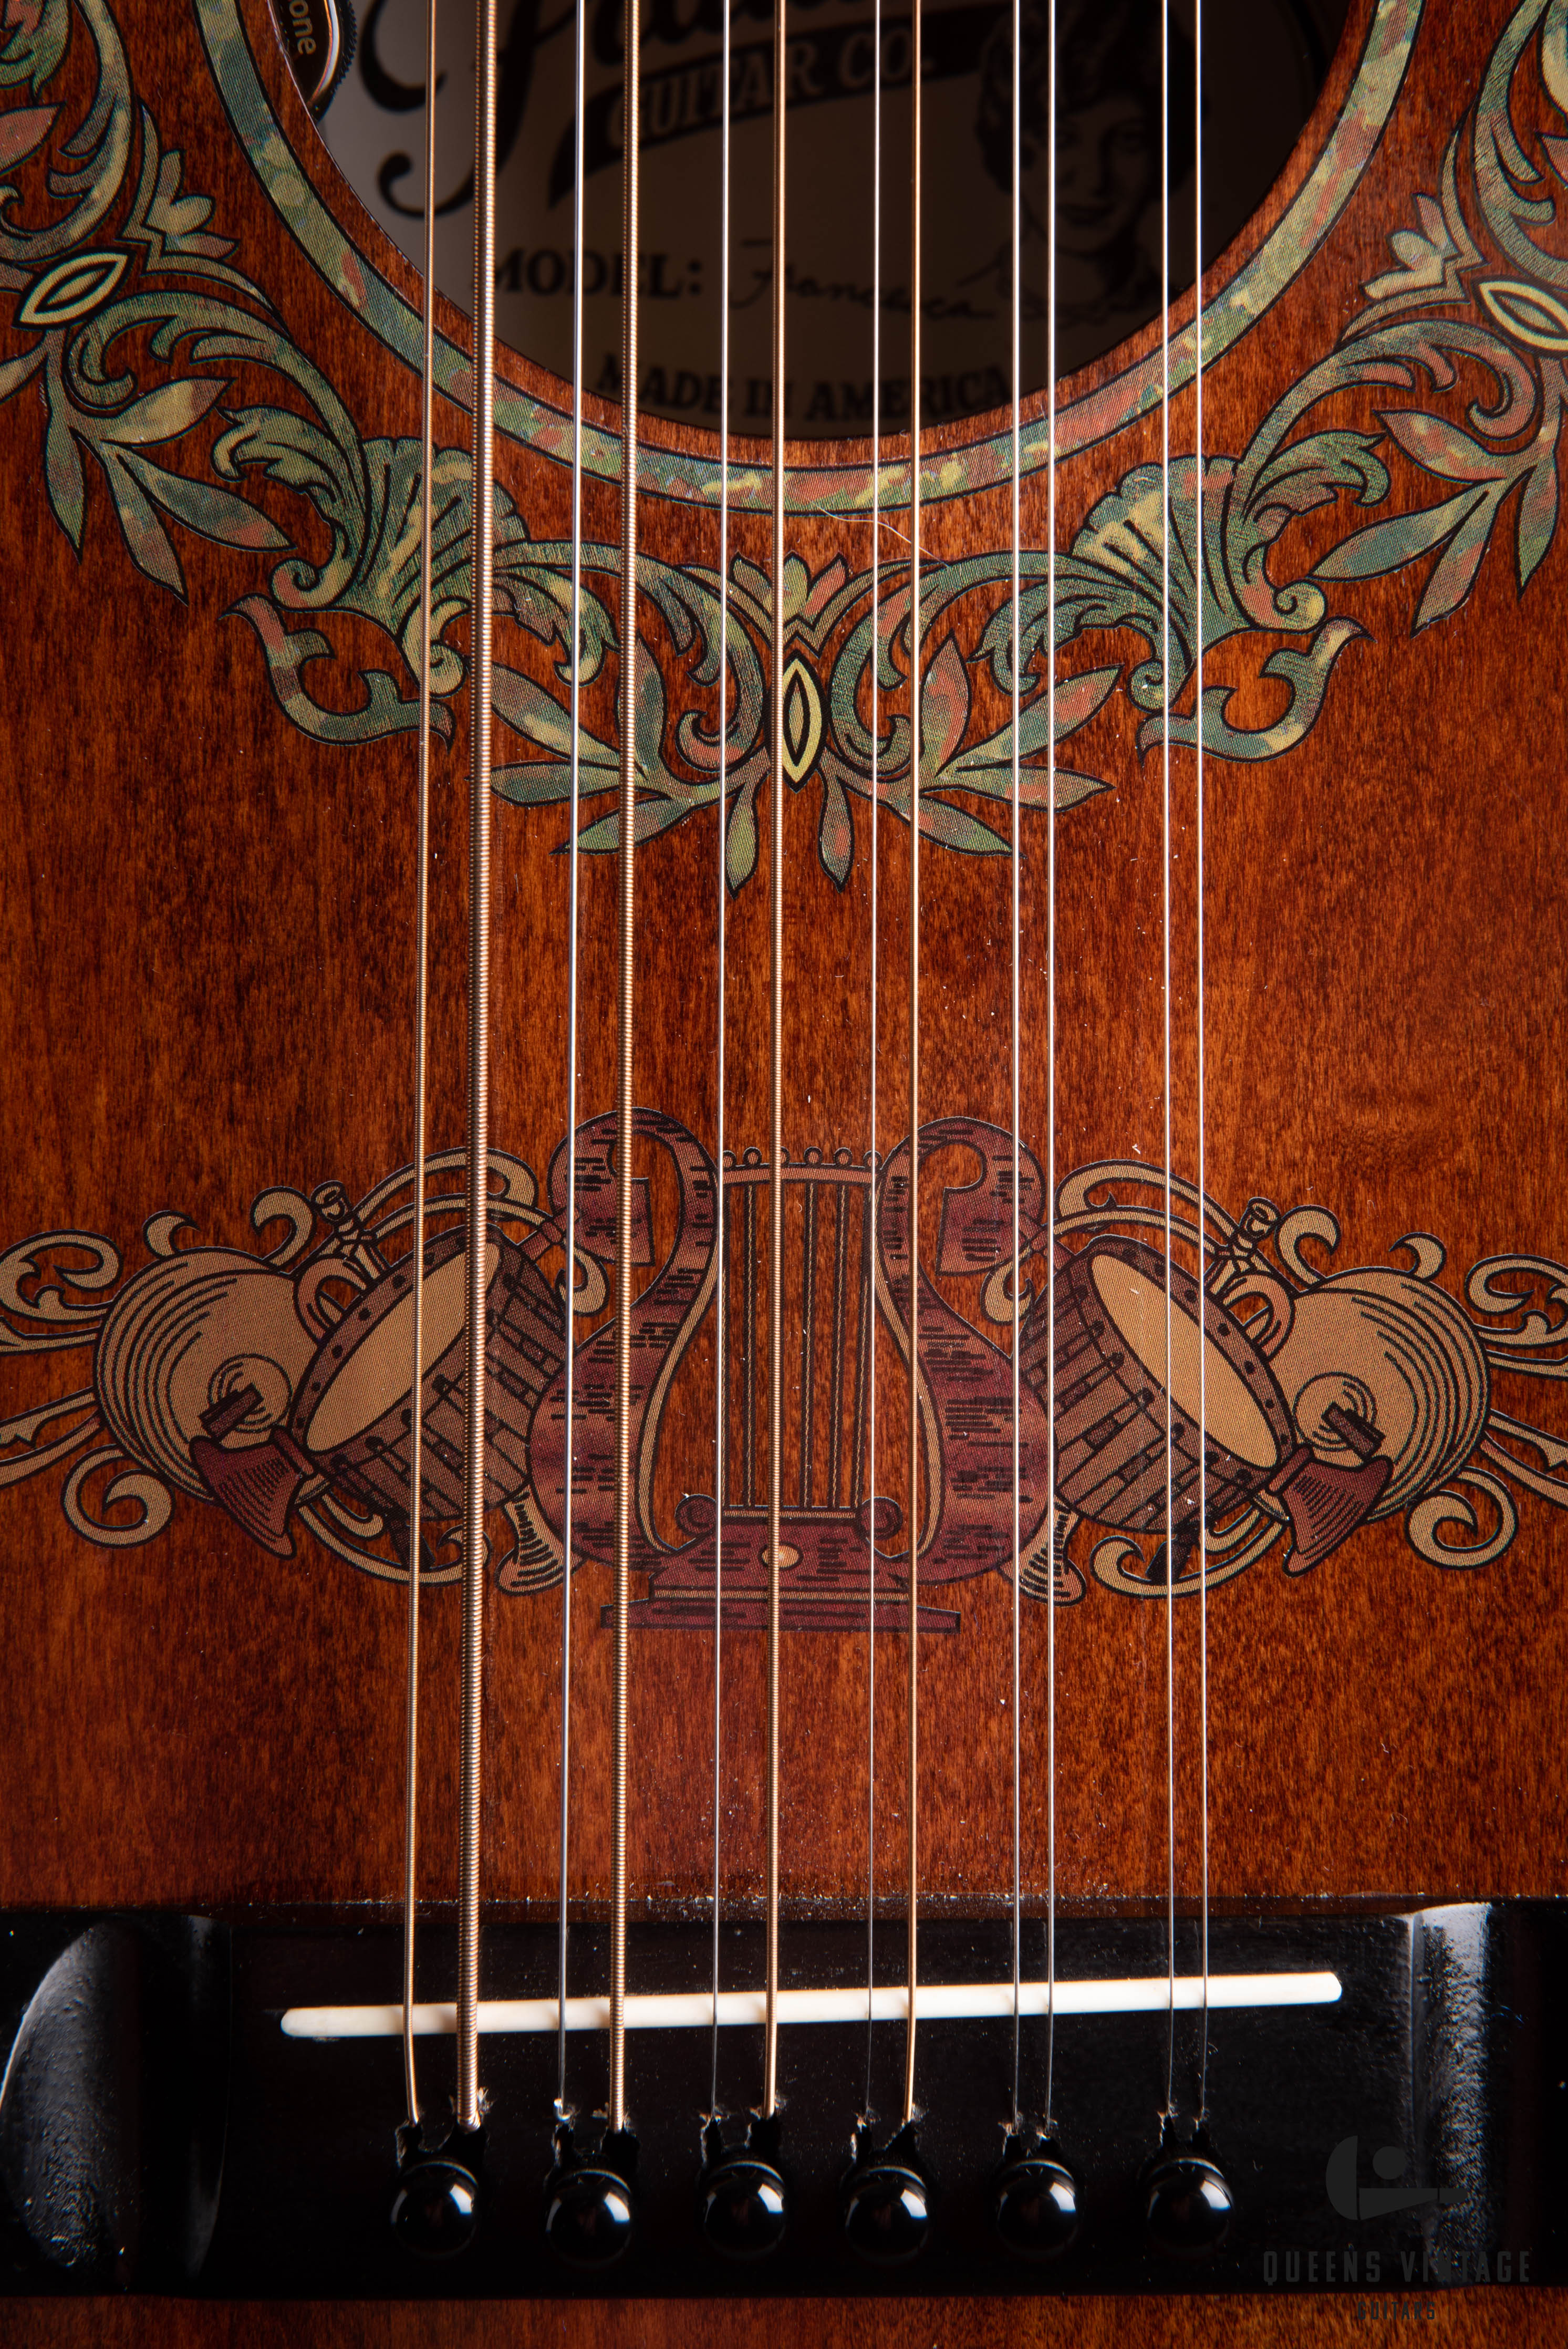 2021 Fraulini Francesca 12 String Acoustic Guitar